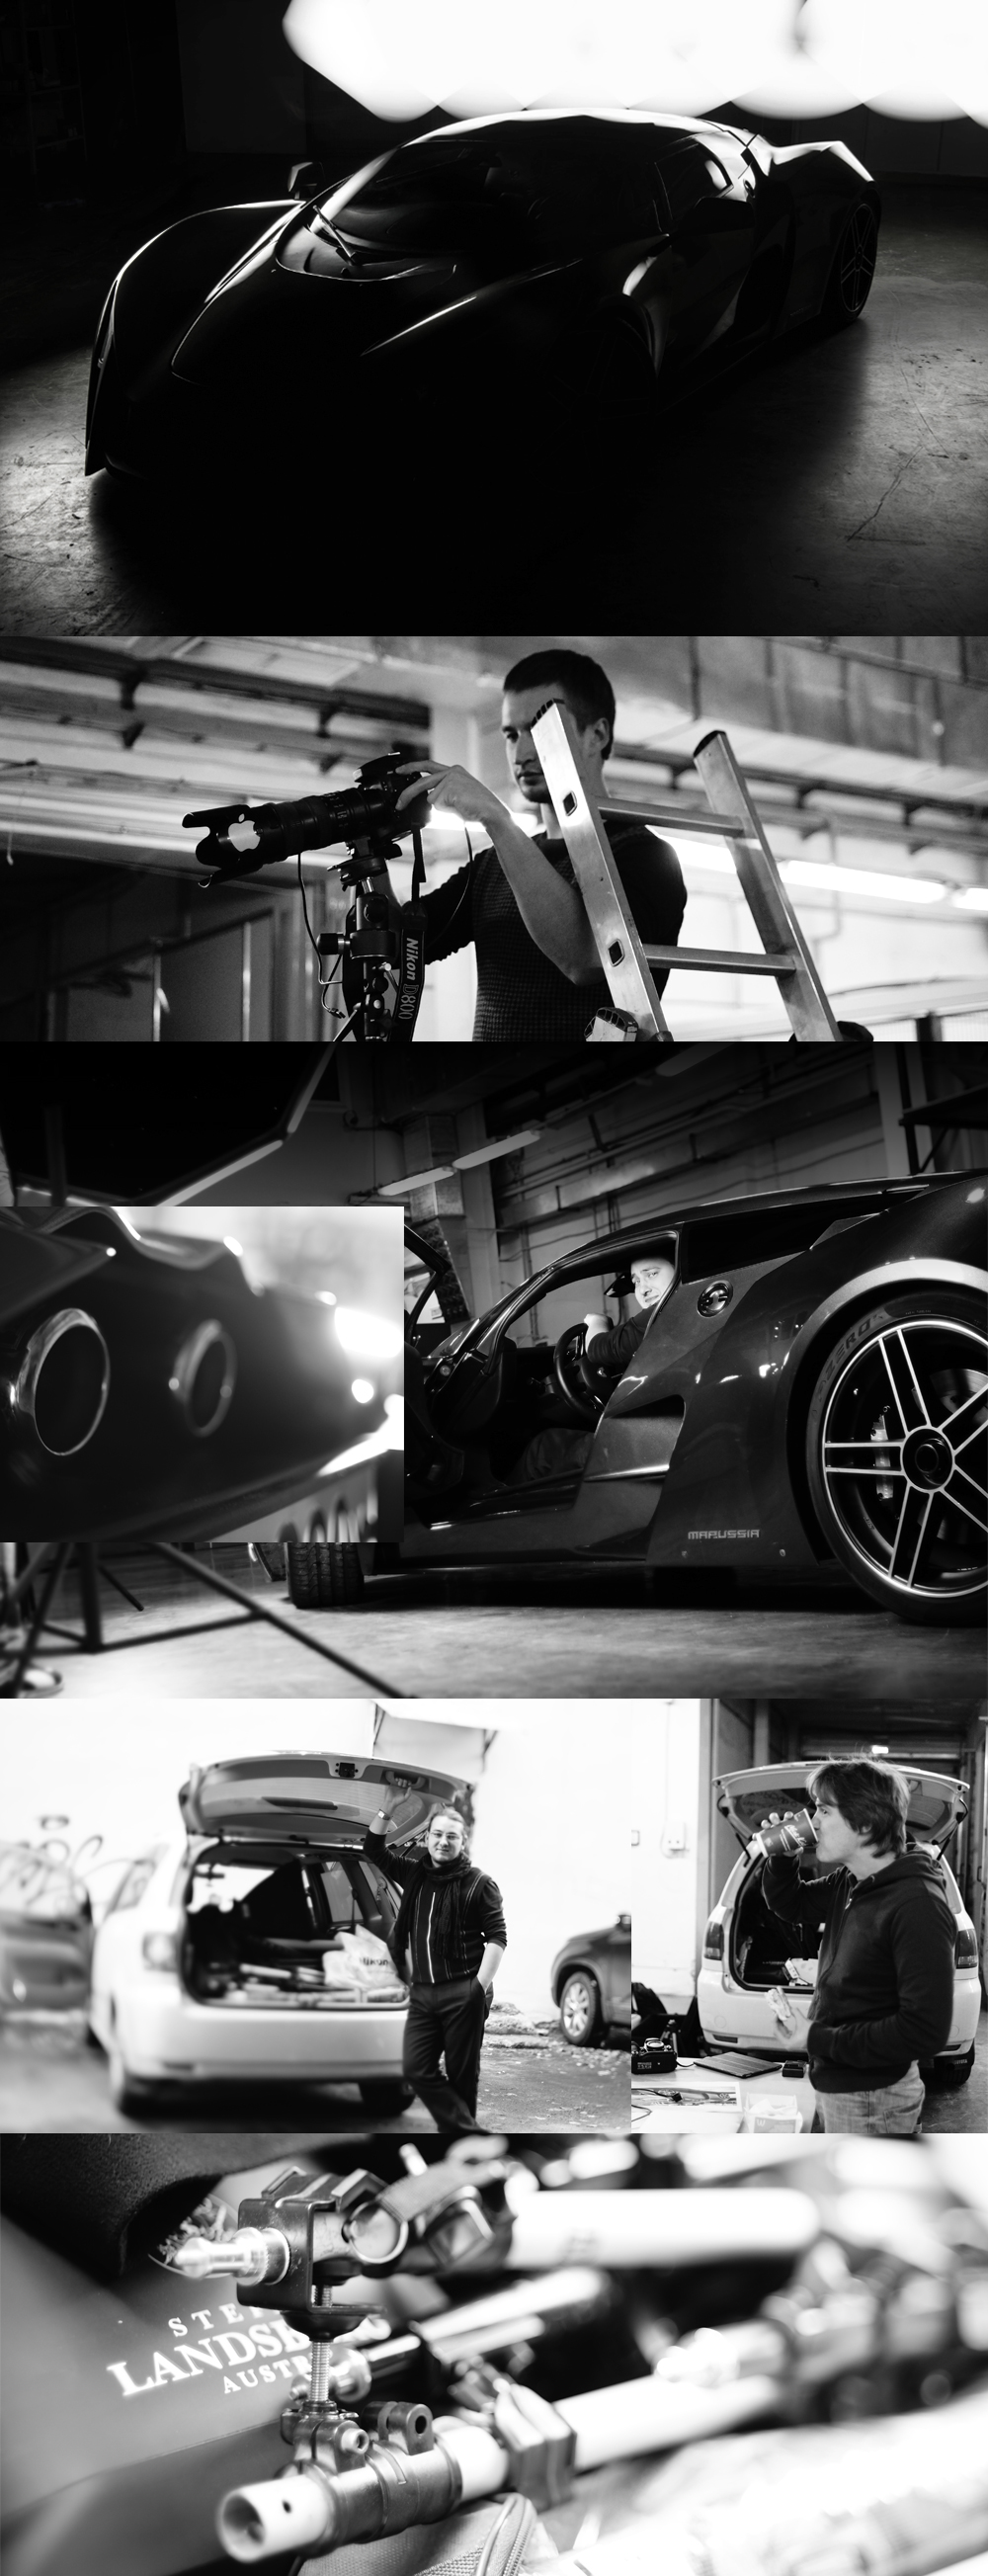 Glazyrin Marussia CGI car photo 3D making of